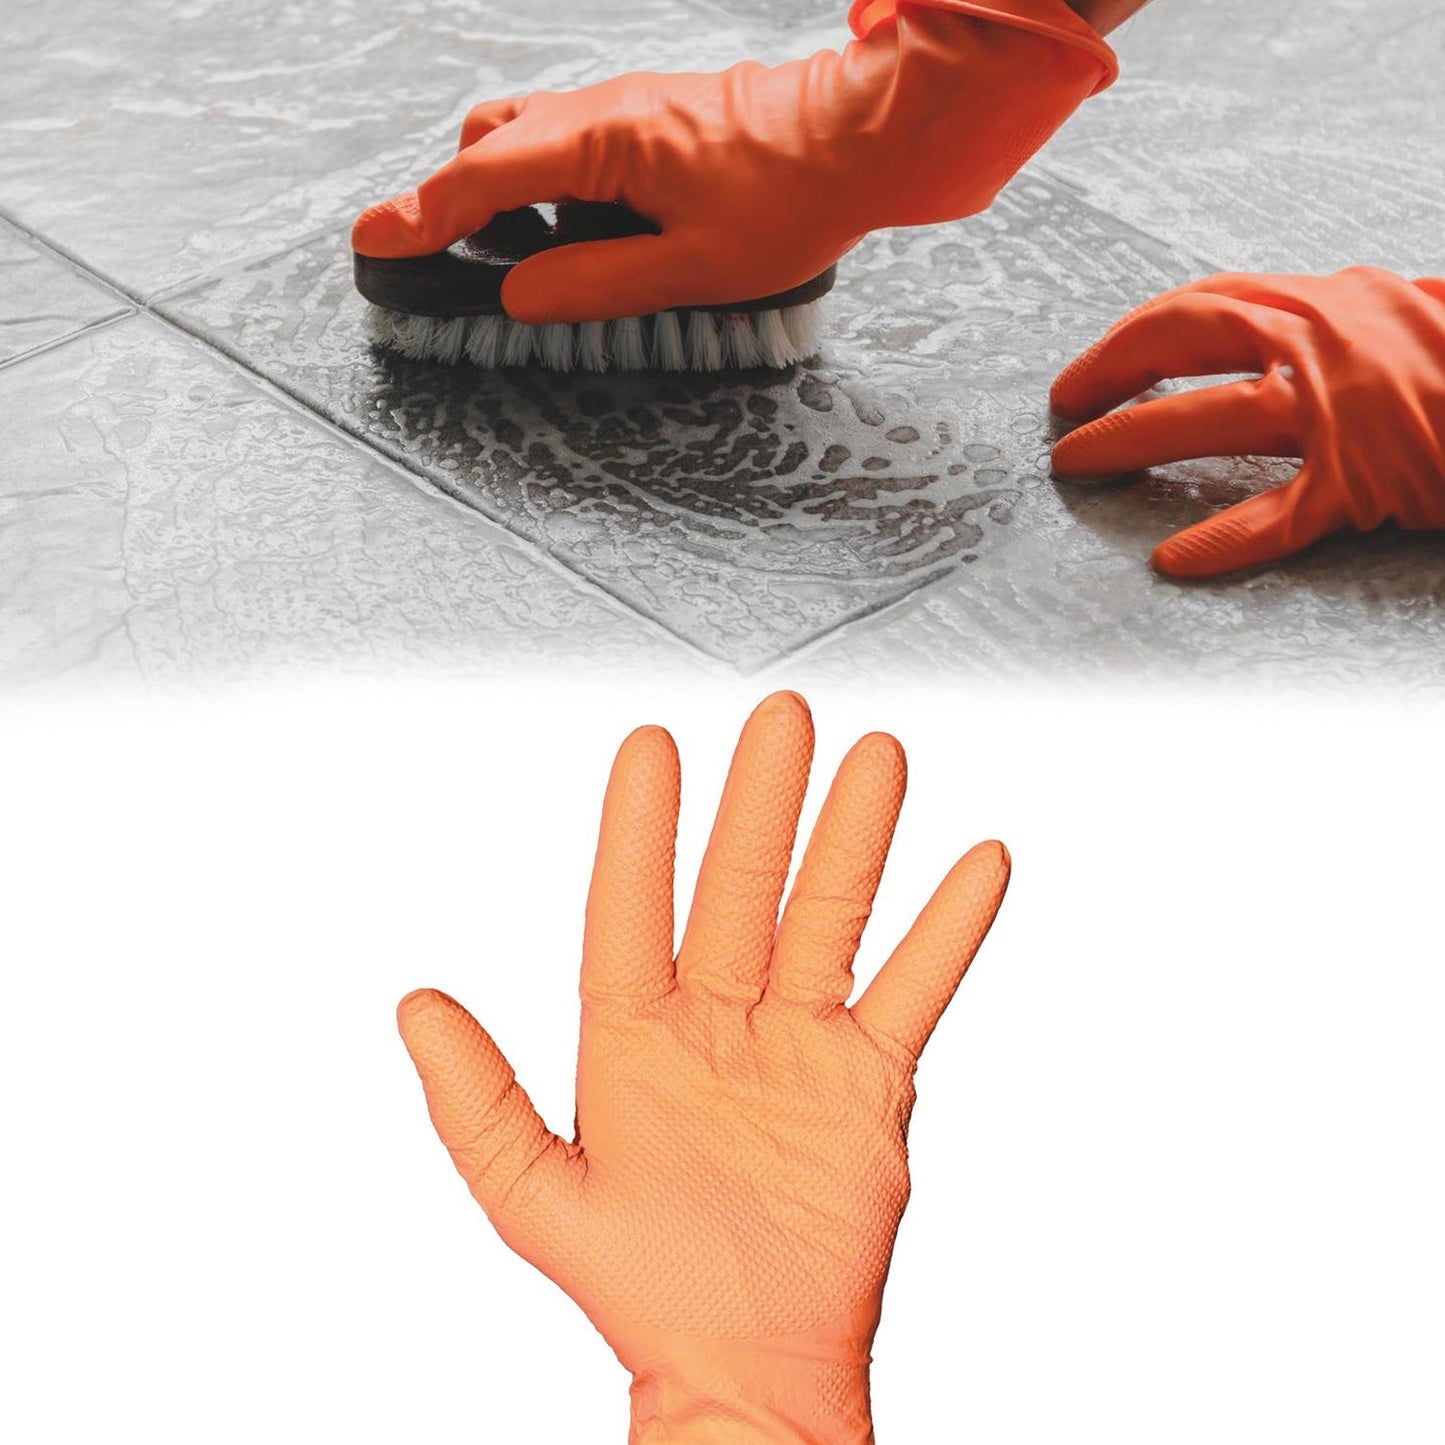 4851 2 Pair Large Orange Gloves For Types Of Purposes Like Washing Utensils, Gardening And Cleaning Toilet Etc. DeoDap